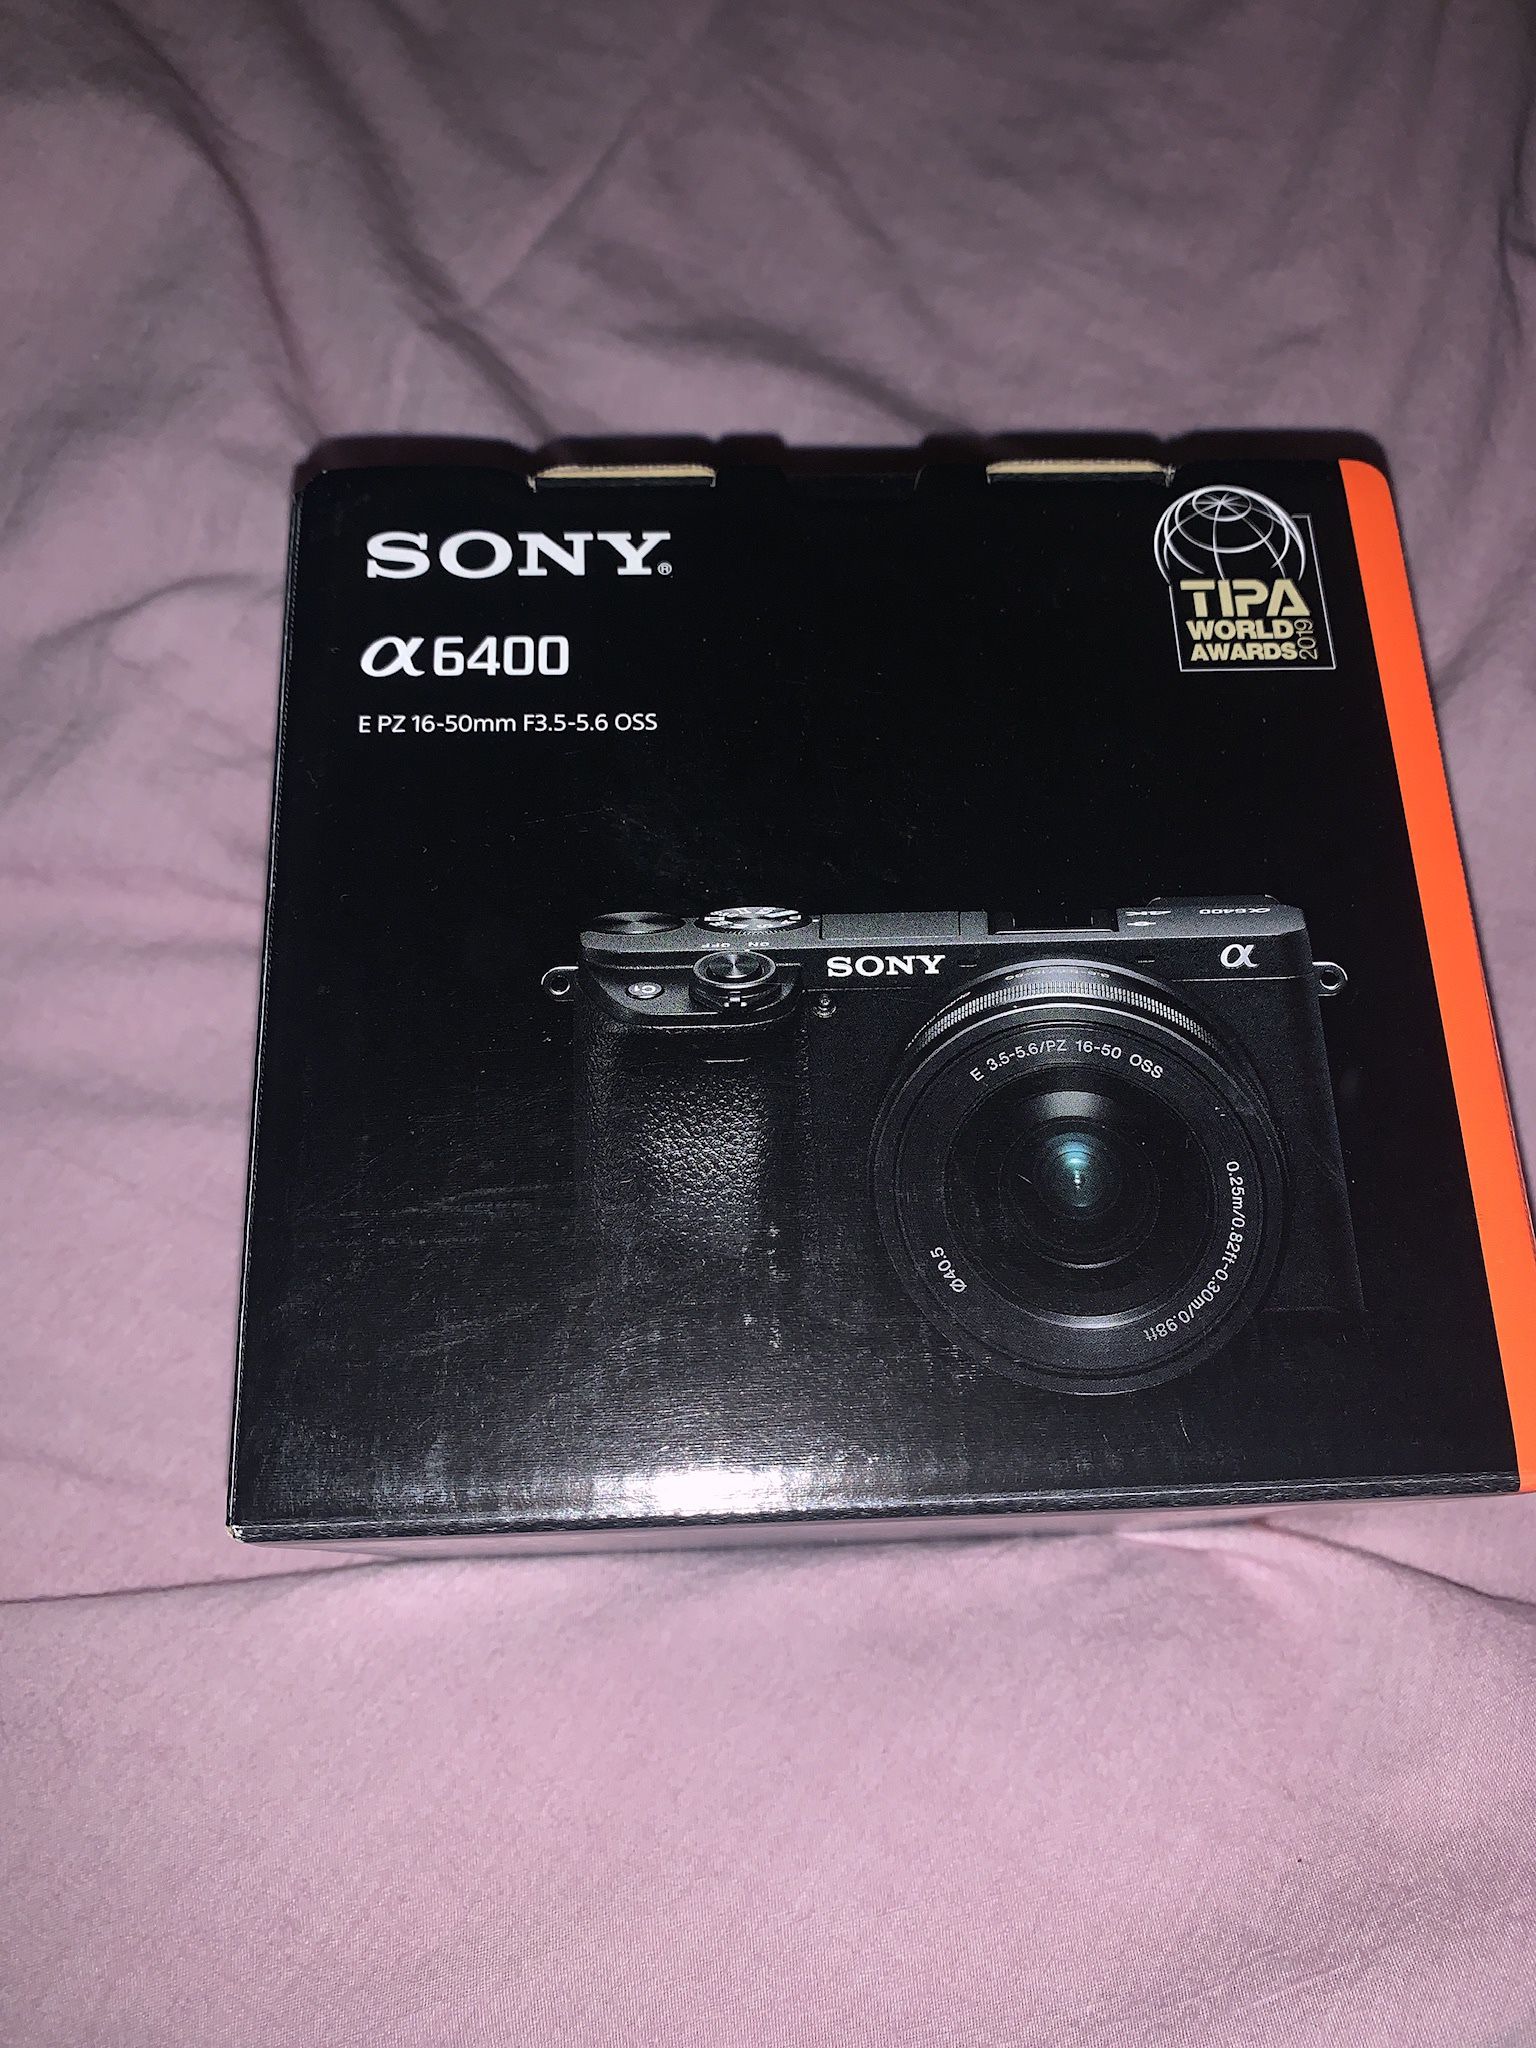 Sony Alpha A6400 Mirrorless Digital Camera with 16-50mm Lens